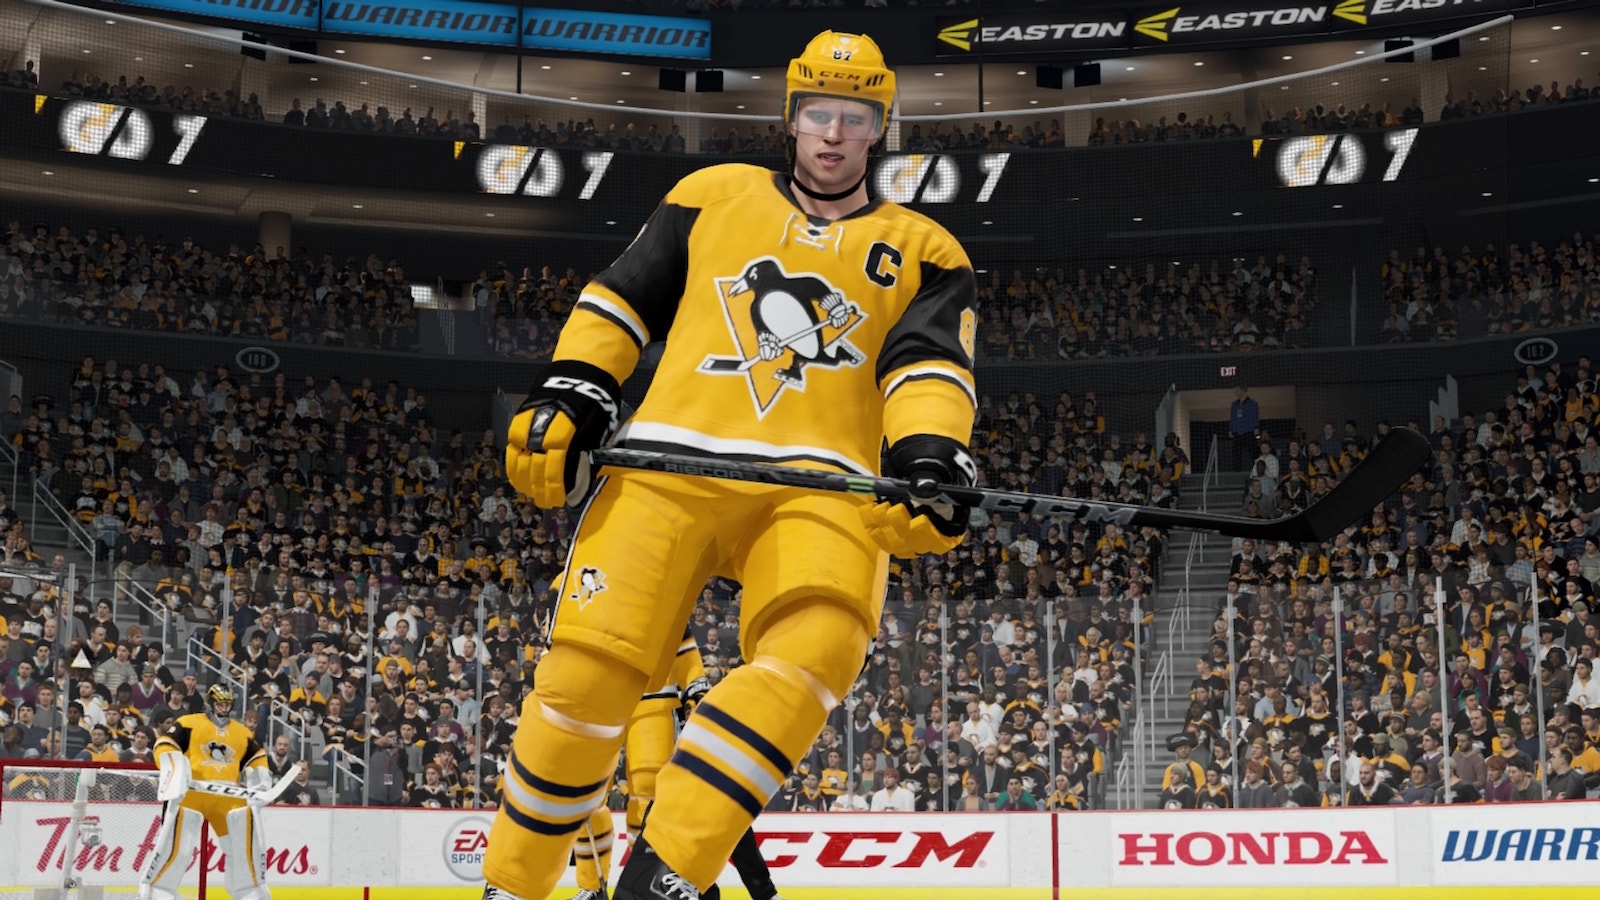 penguins alternate jersey 2019